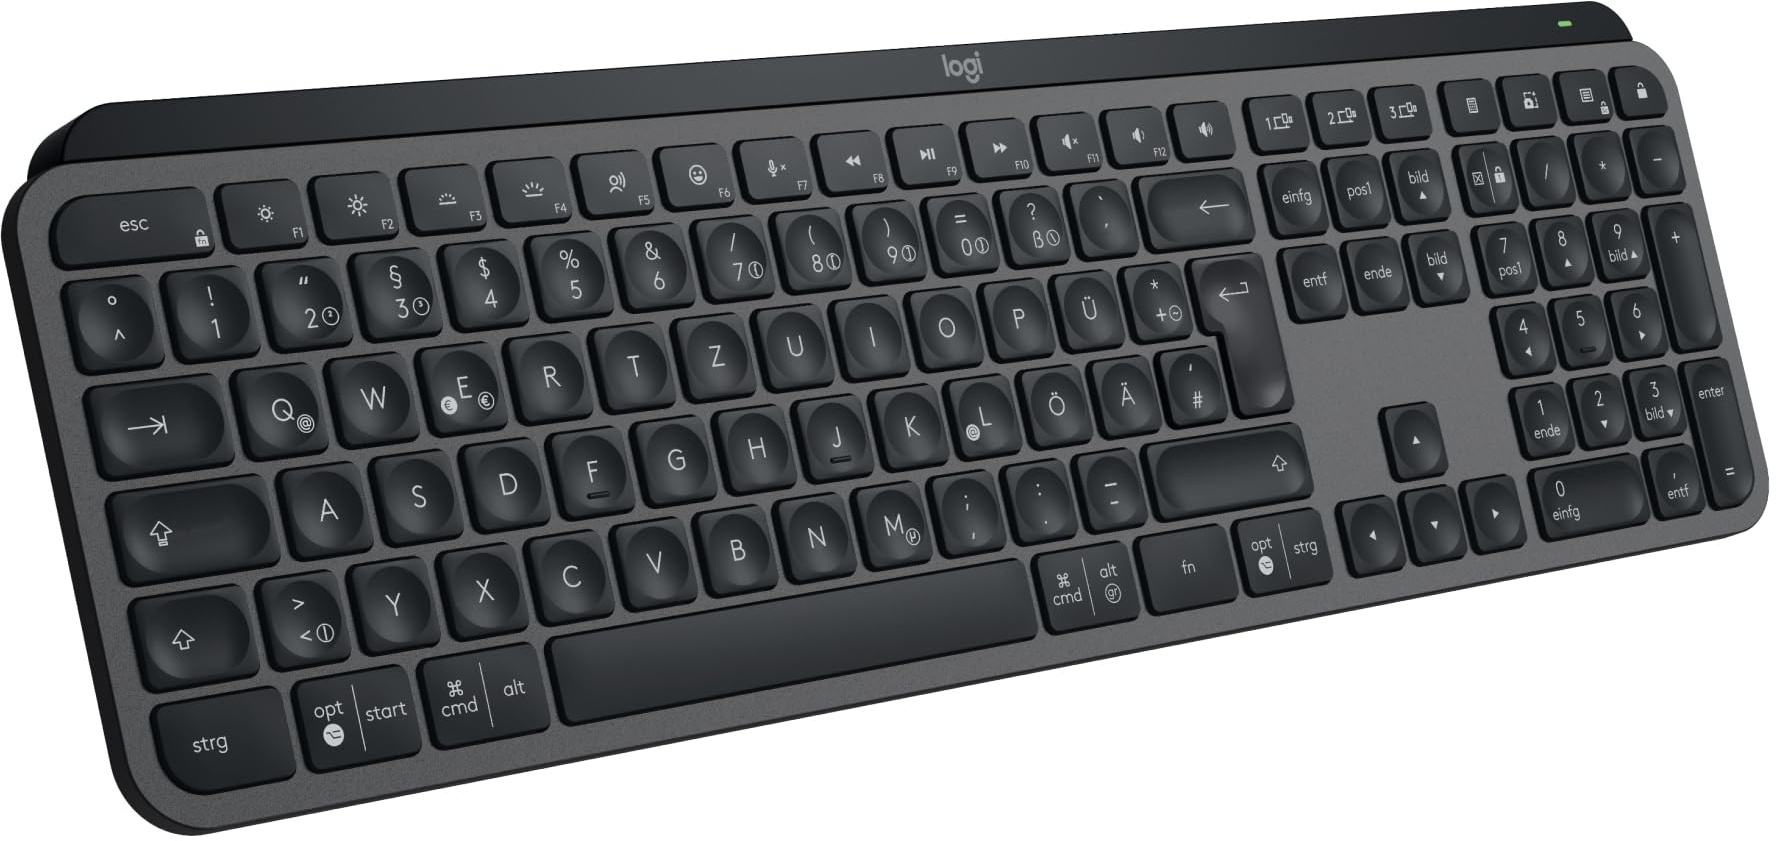 Logitech MX Keys S kabellose Tastatur, Low Profile, Precise Quiet Typing, Programmable , Backlighting, Bluetooth, Rechargeable, für Windows PC/Linux/Chrome/Mac - Graphit, Deutsches QWERTZ-Layout